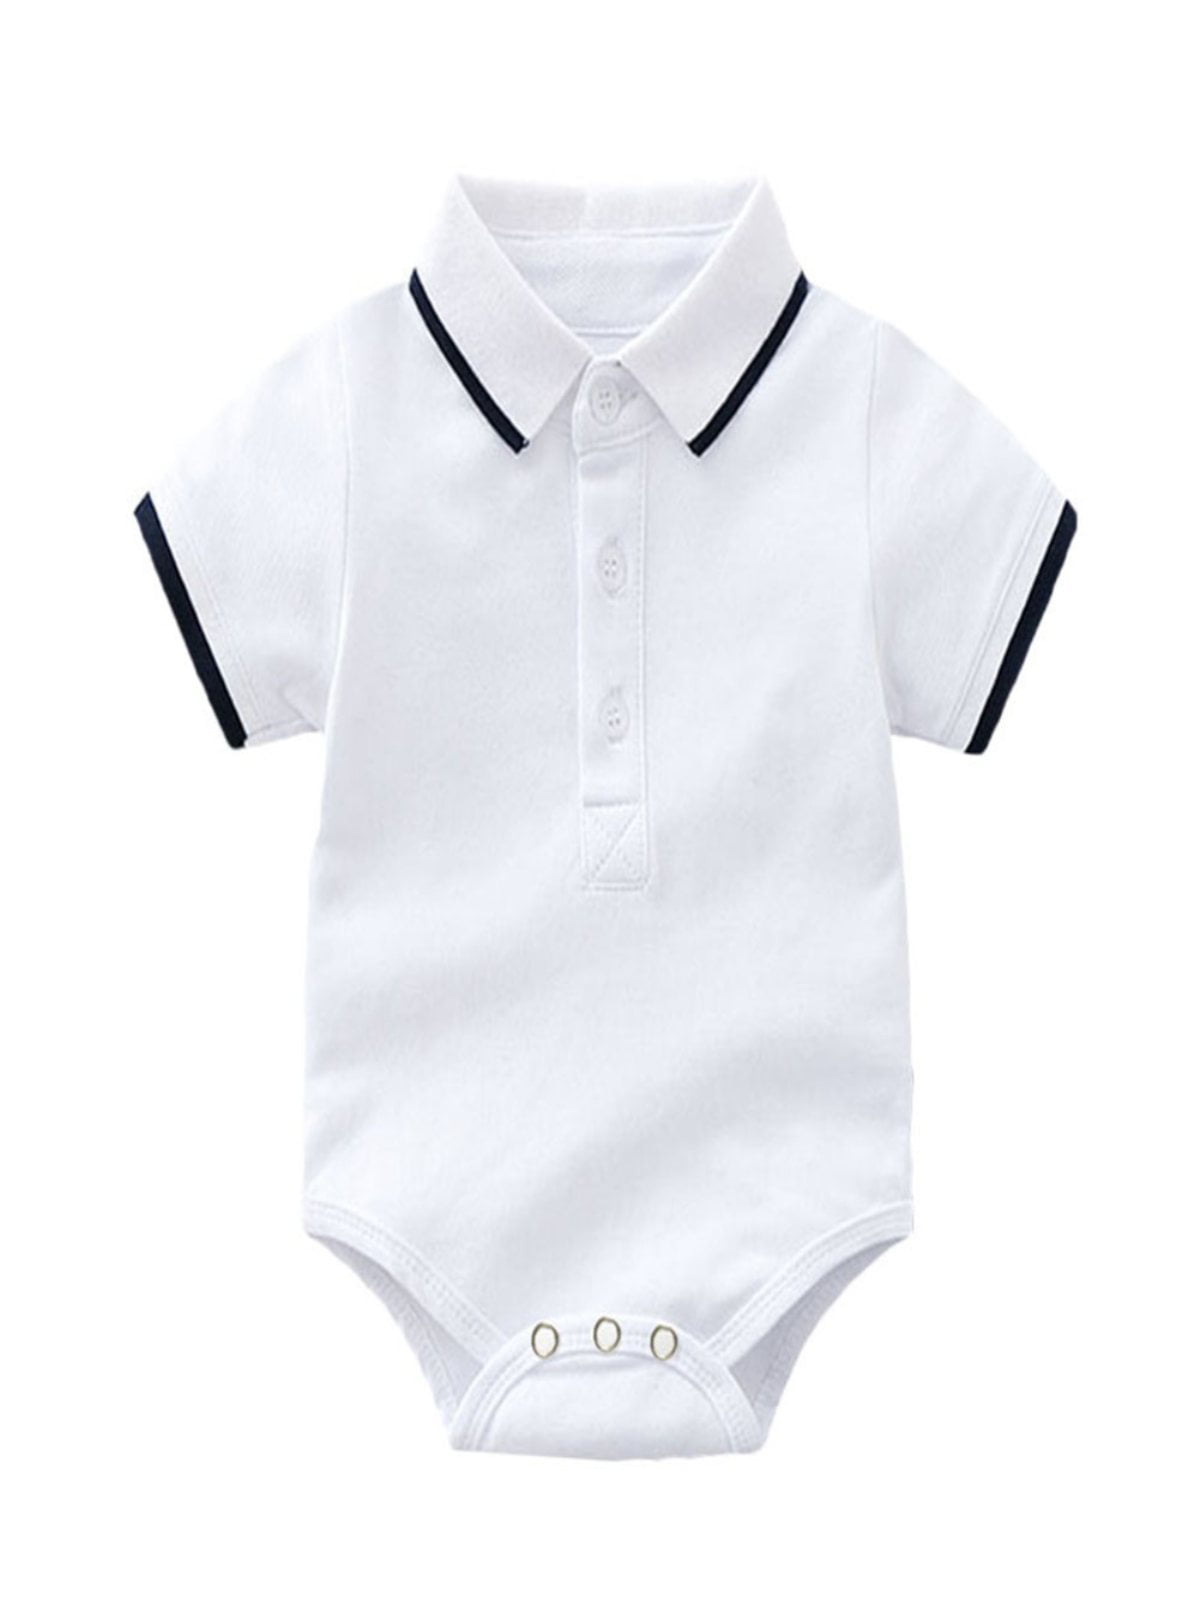 Auro Mesa Infant Baby Boys' Long Sleeve Cotton White Lapel Polo T-Shirts tees 1-4years 